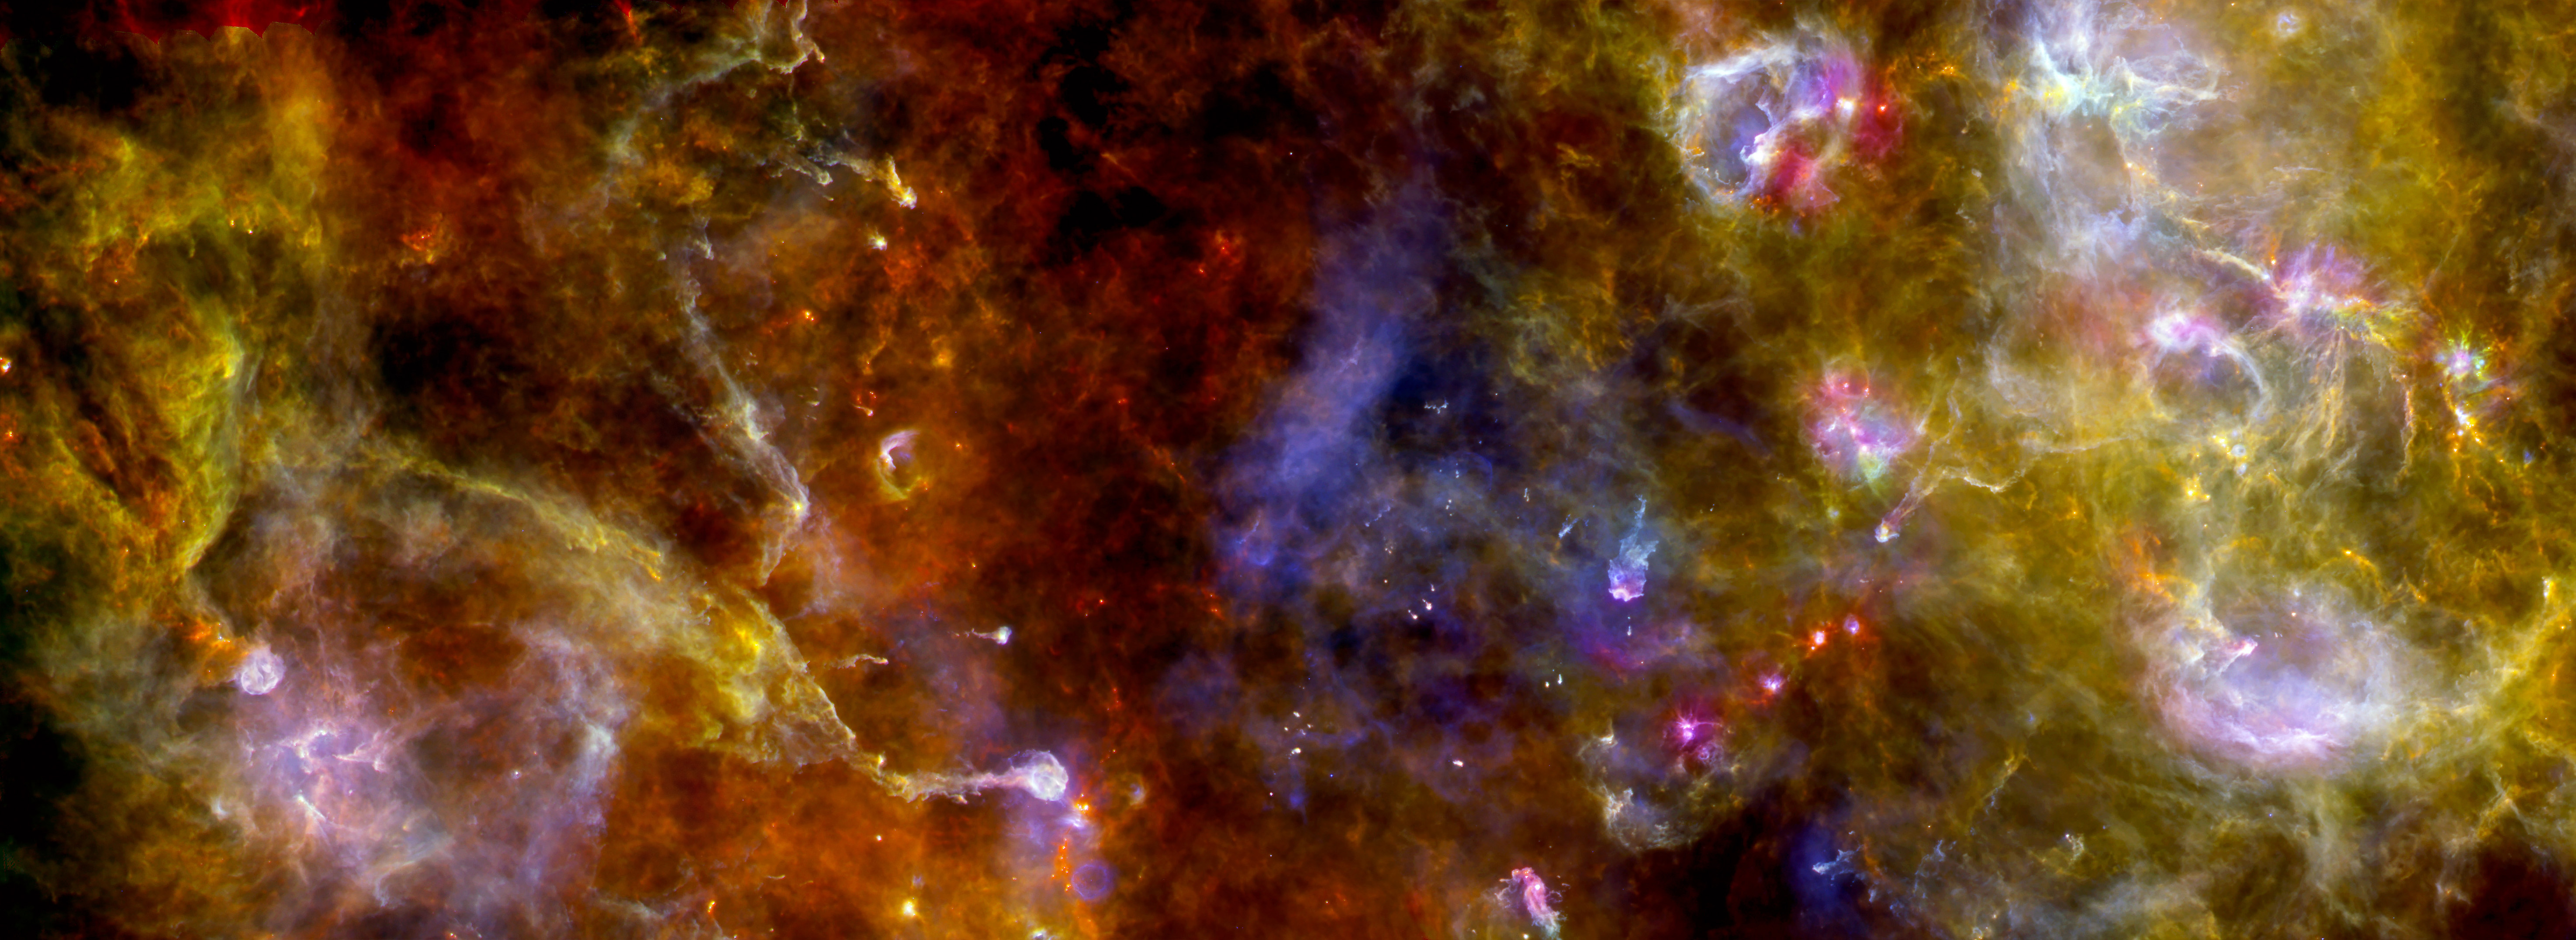 Cygnus X par Herschel